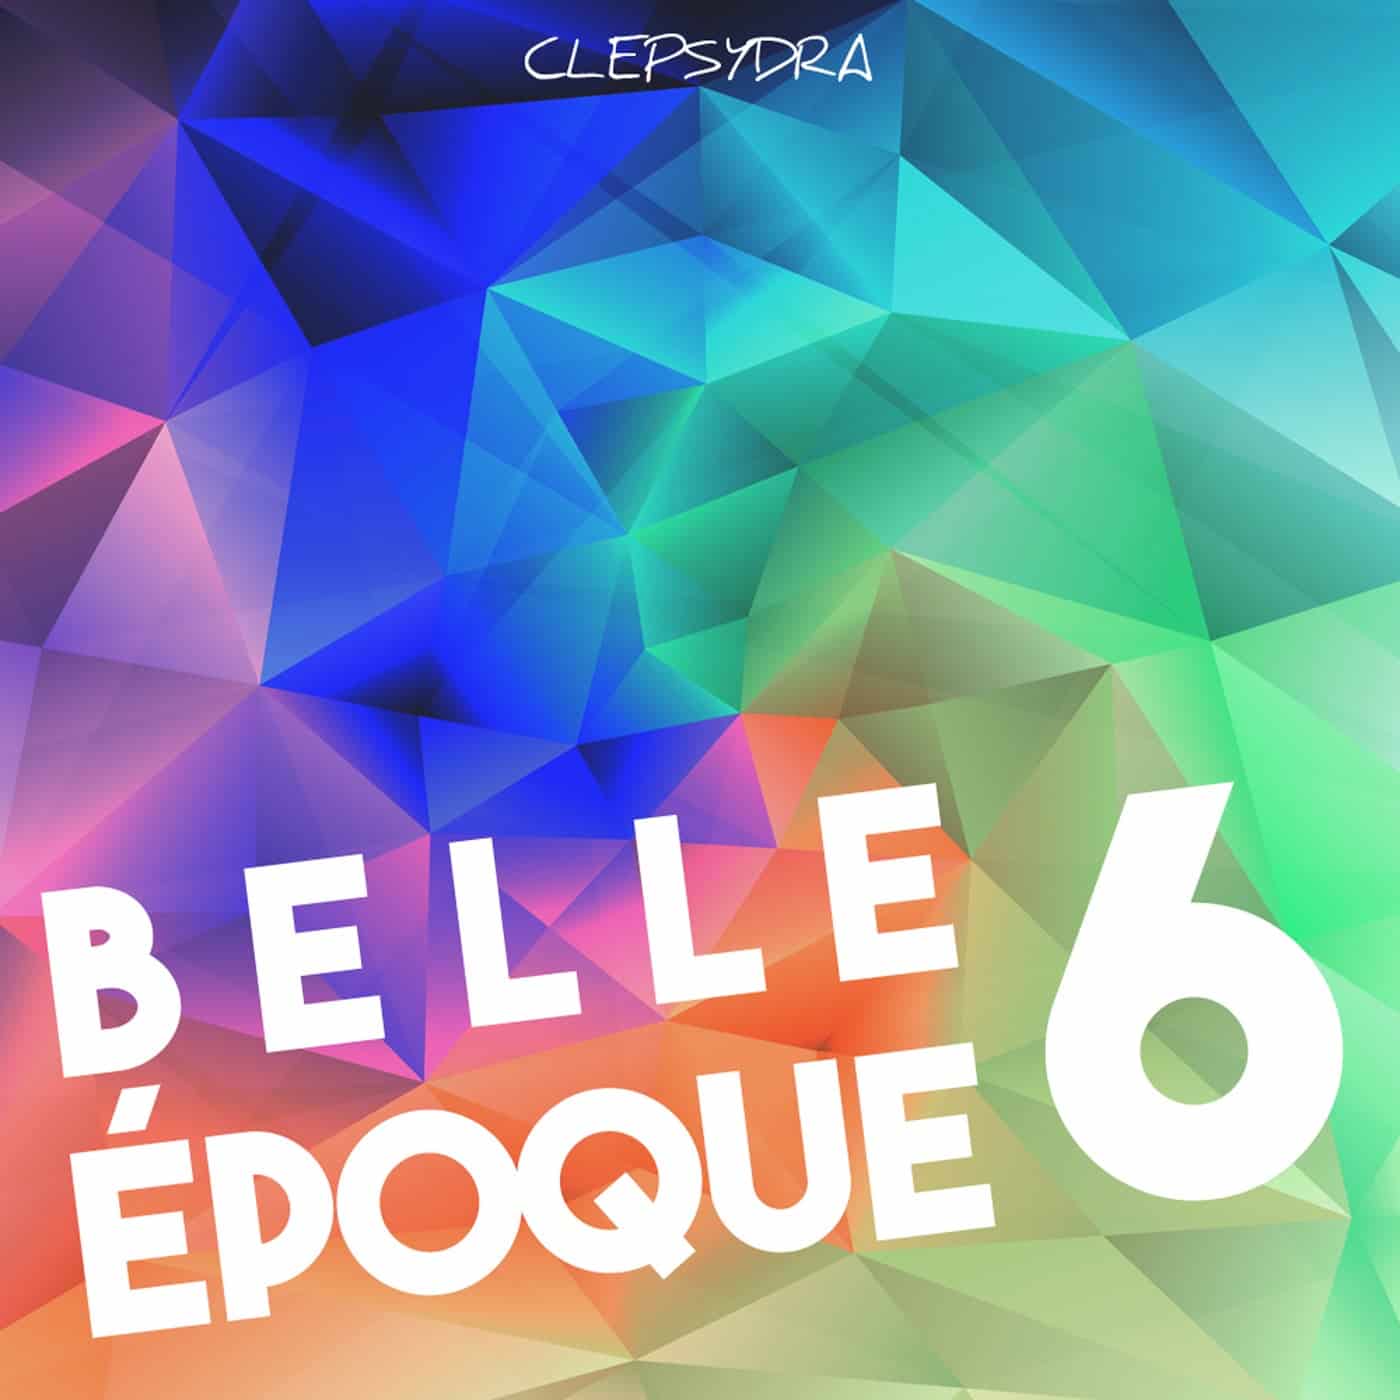 Download VA - Belle Époque 6 on Electrobuzz